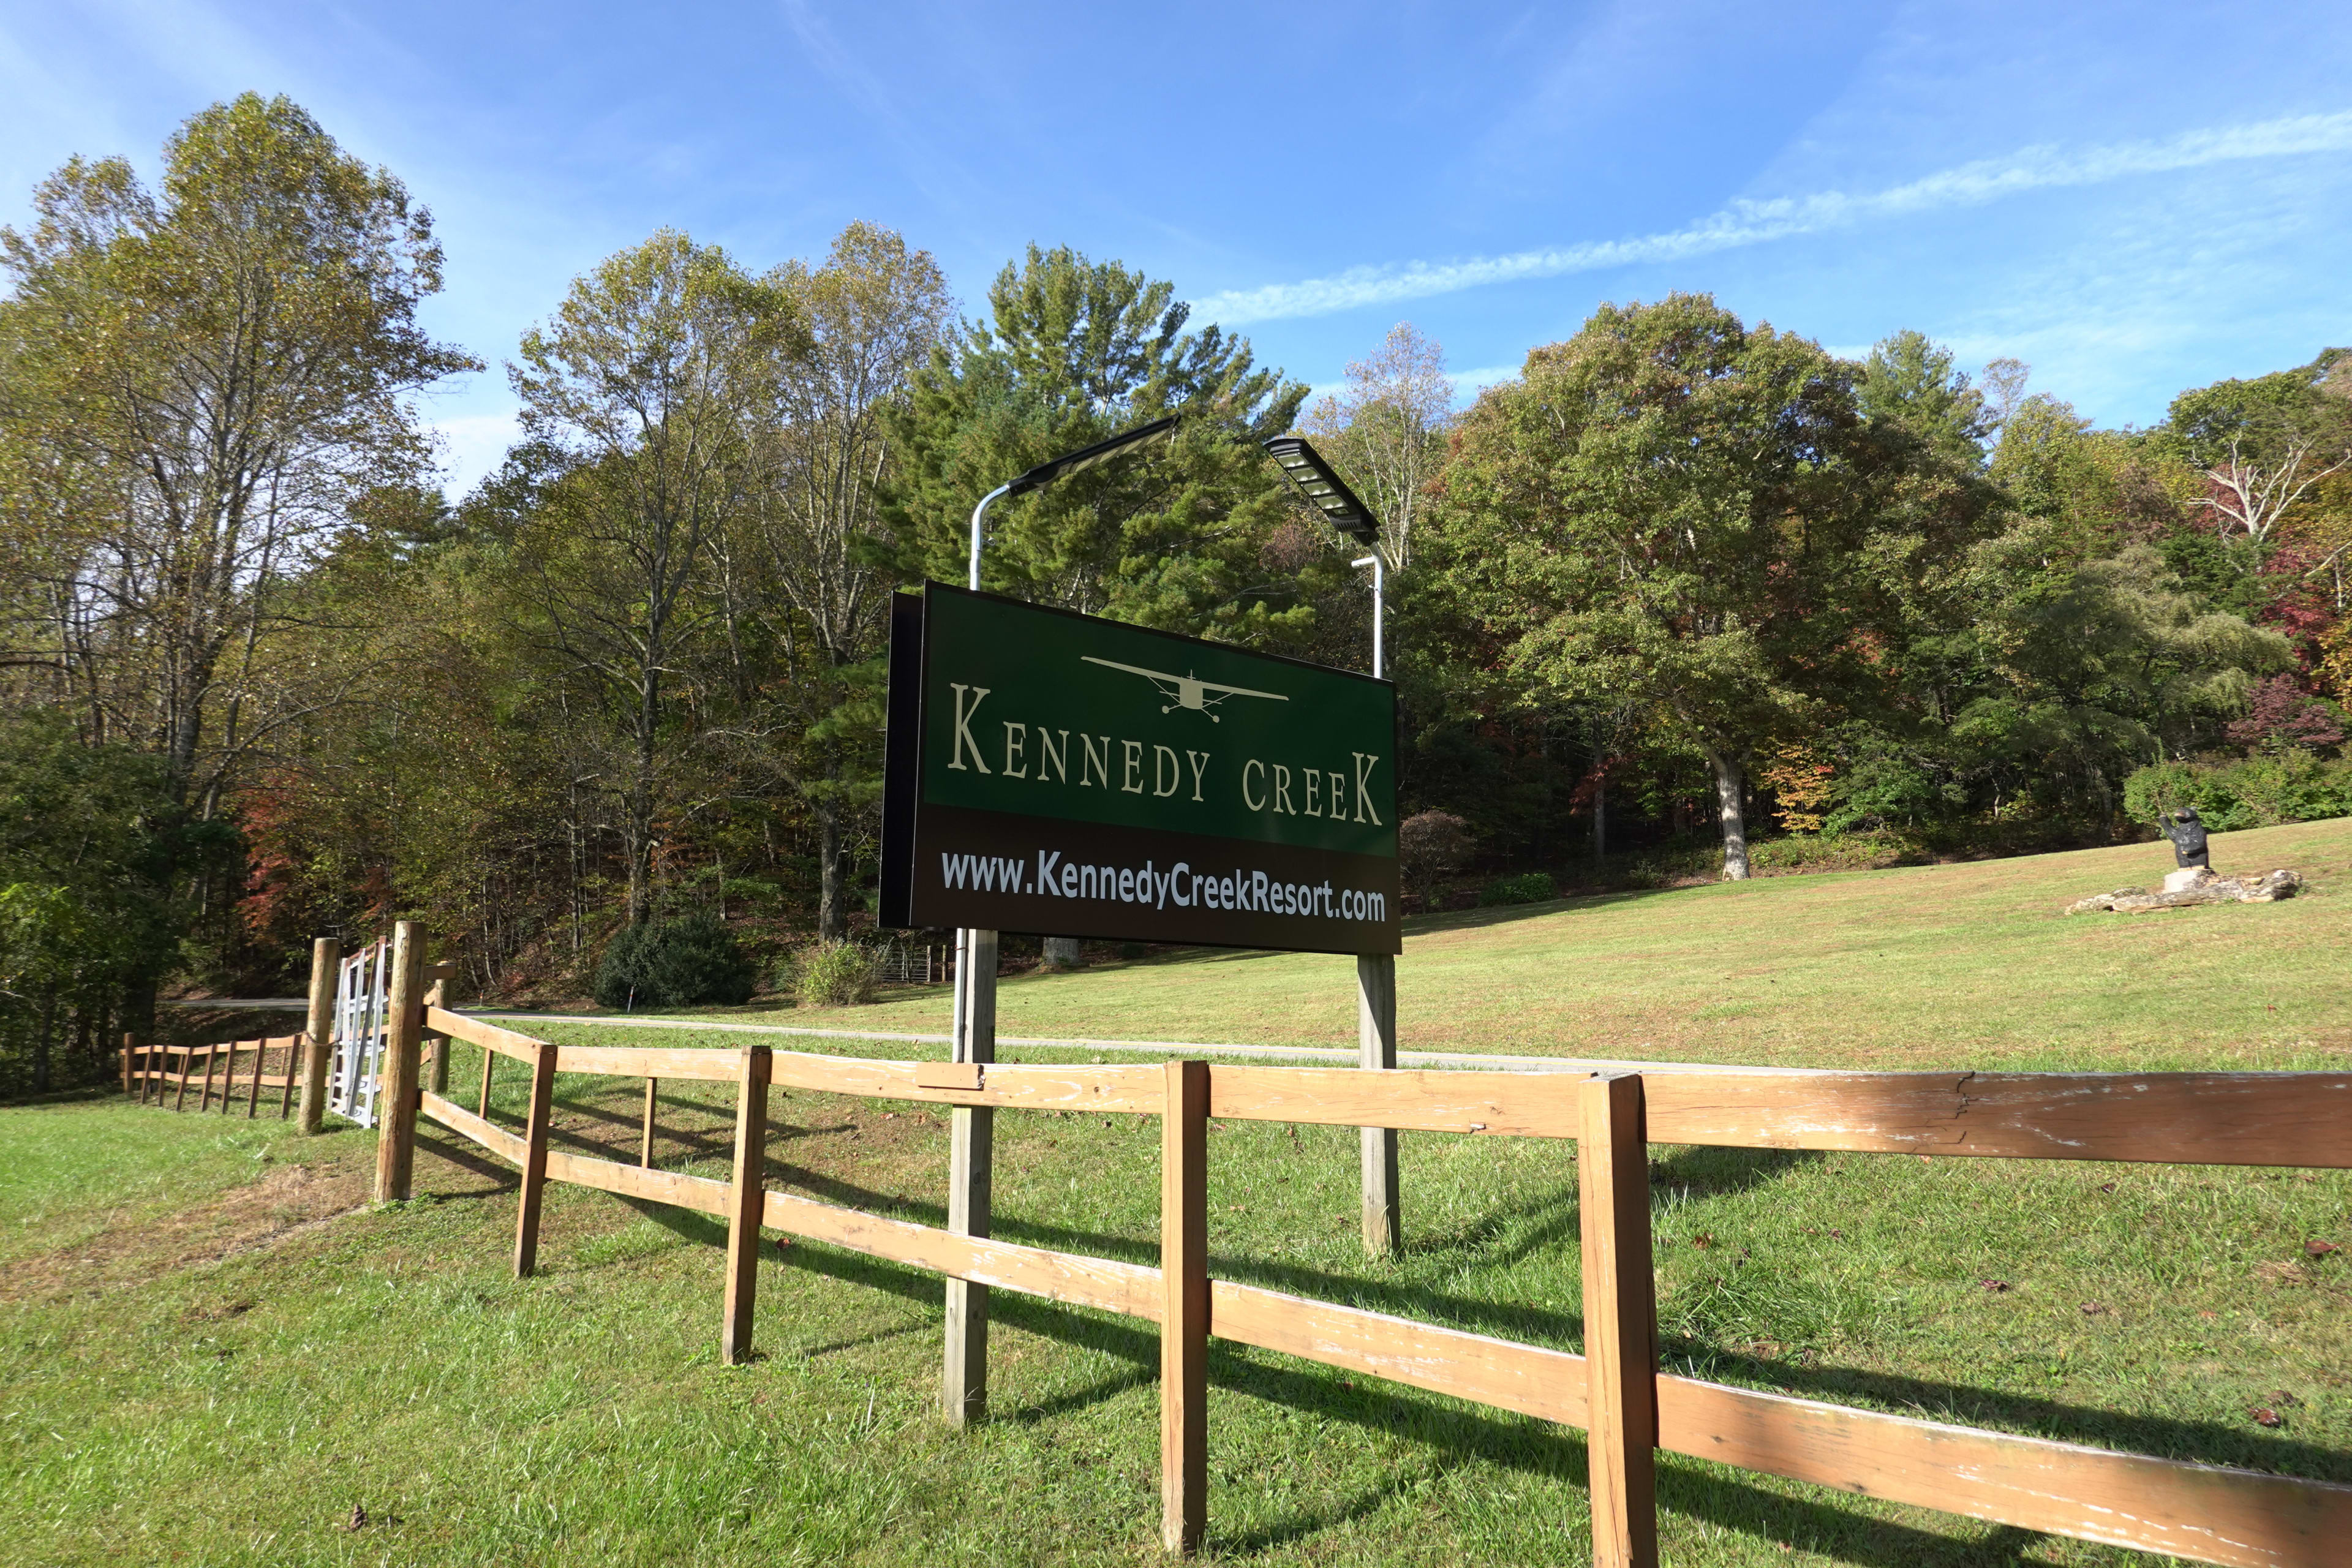 Kennedy Creek Resort: Tents, Cabins